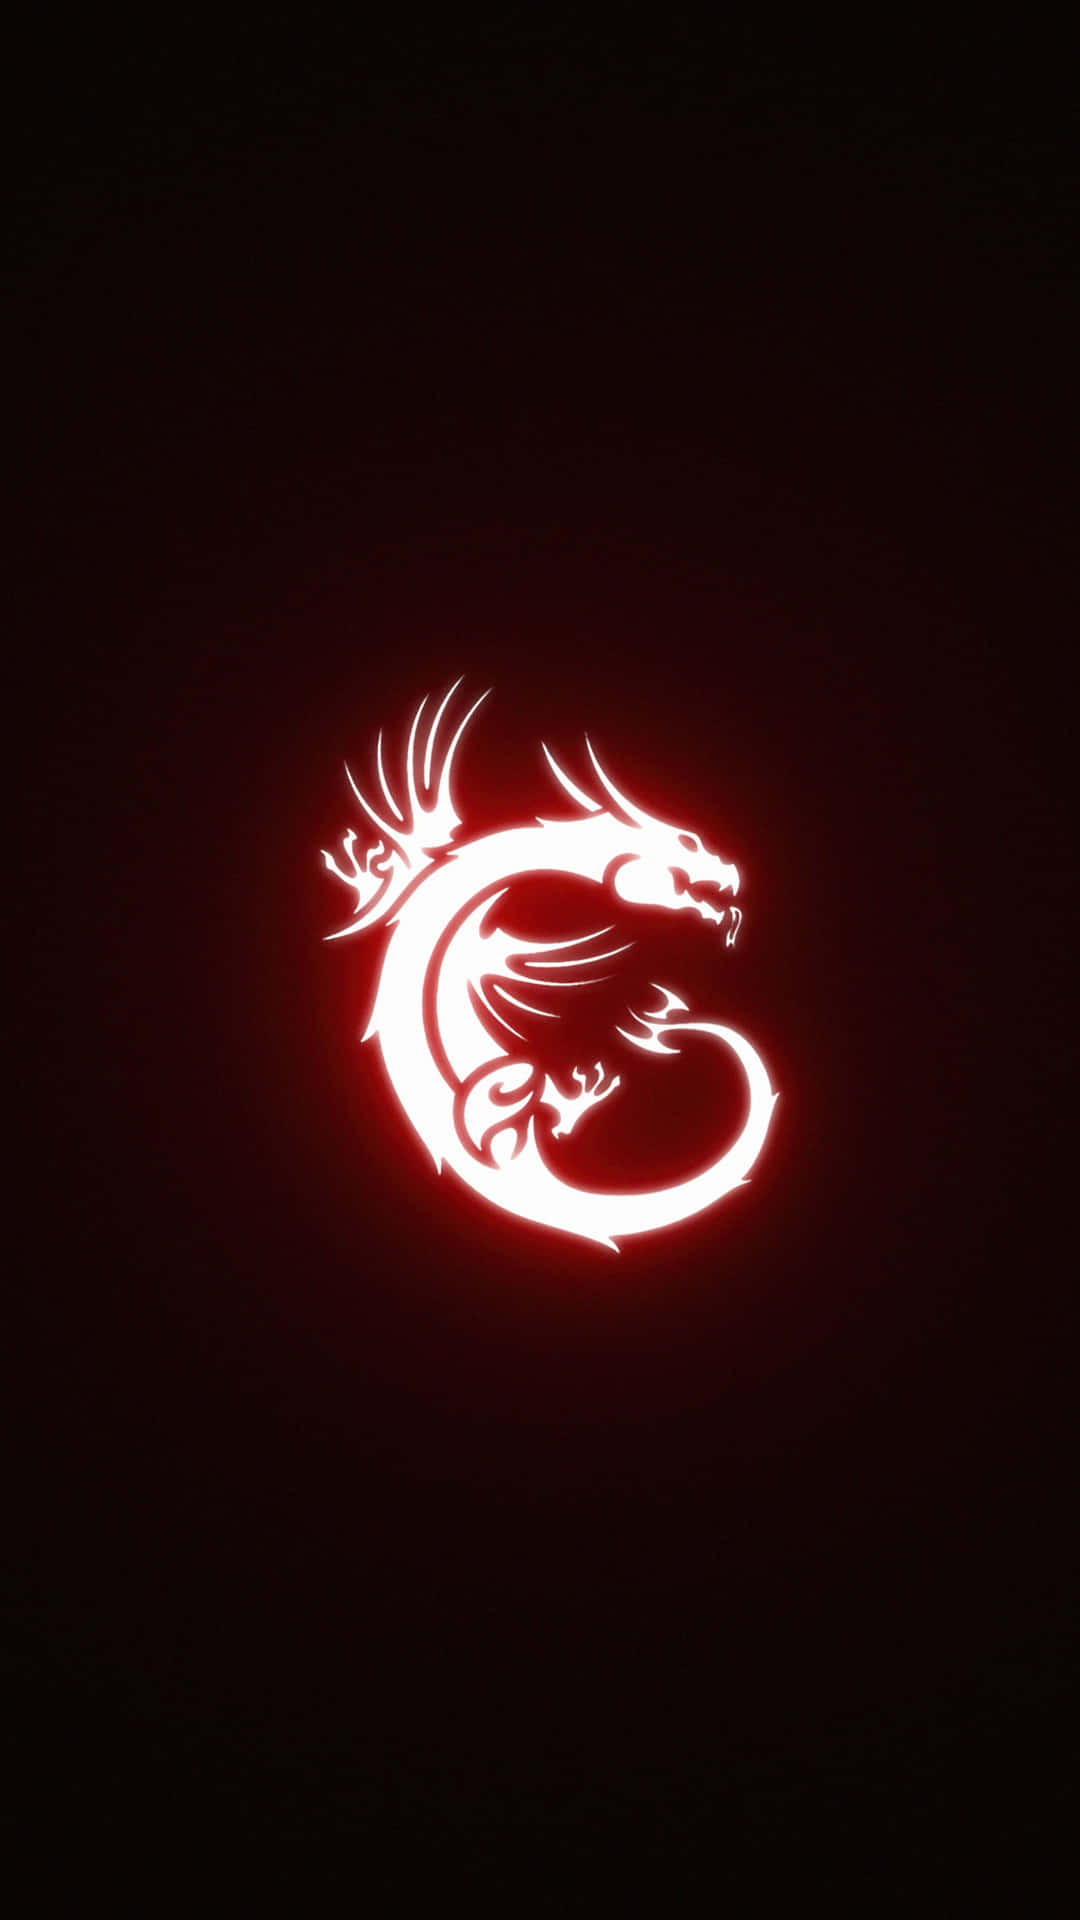 Download Red Gaming Glowing Dragon Wallpaper | Wallpapers.com